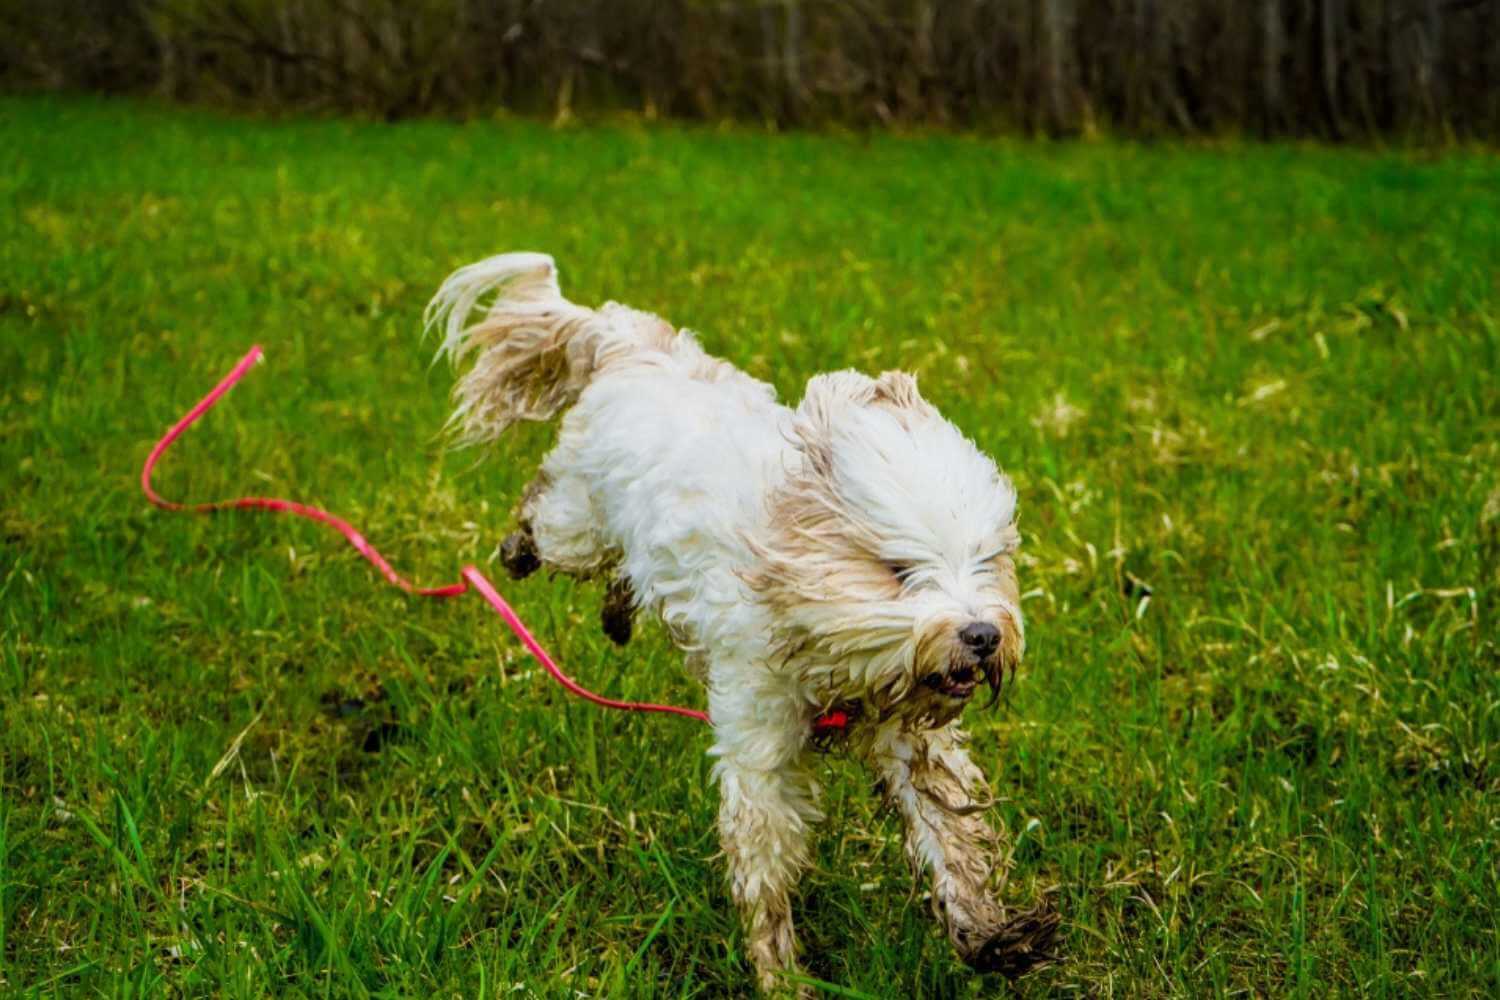 Buffalo NY Dog Parks Dog Running in Mud